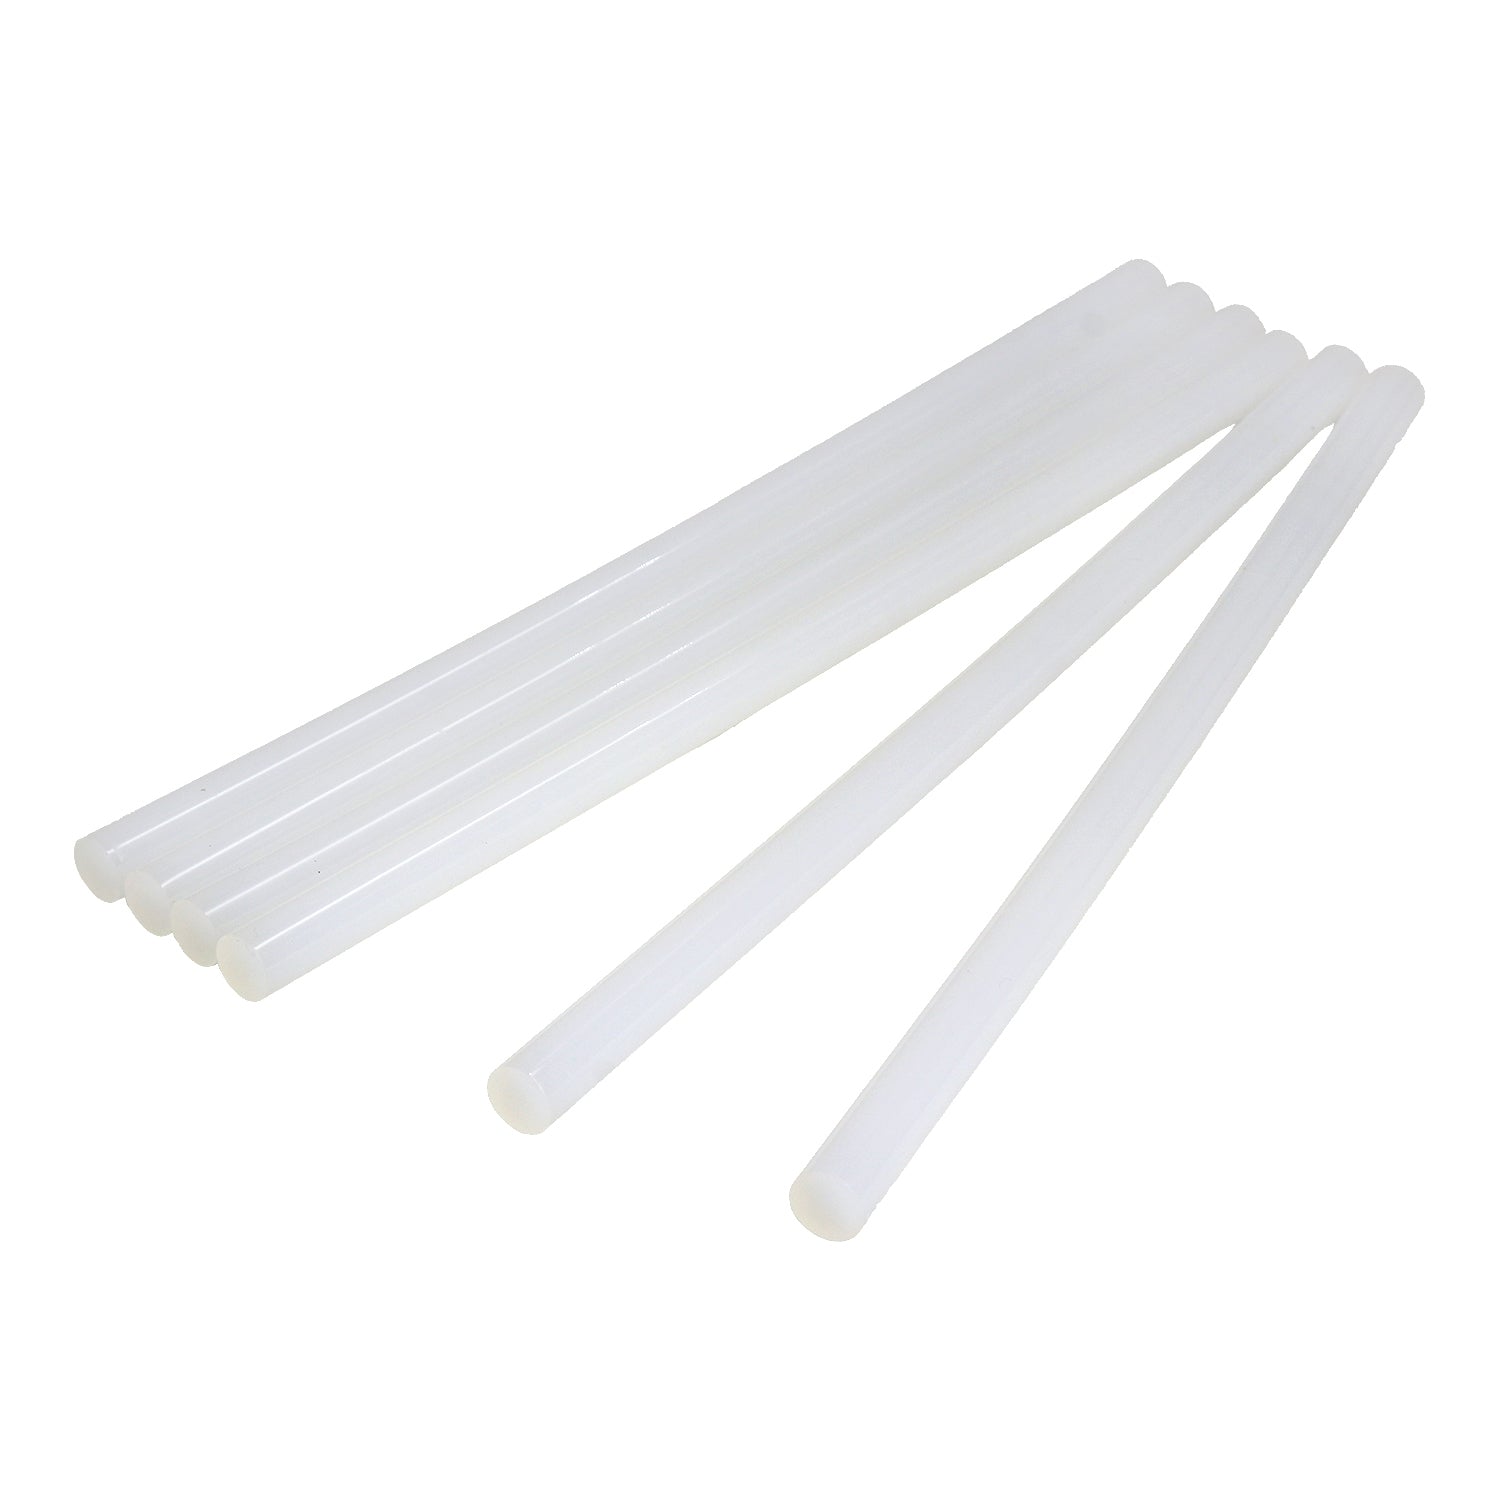 Surebonder 707 High Performance Glue Sticks 1/2 x 10 Glue Sticks - 5lbs /  Clear